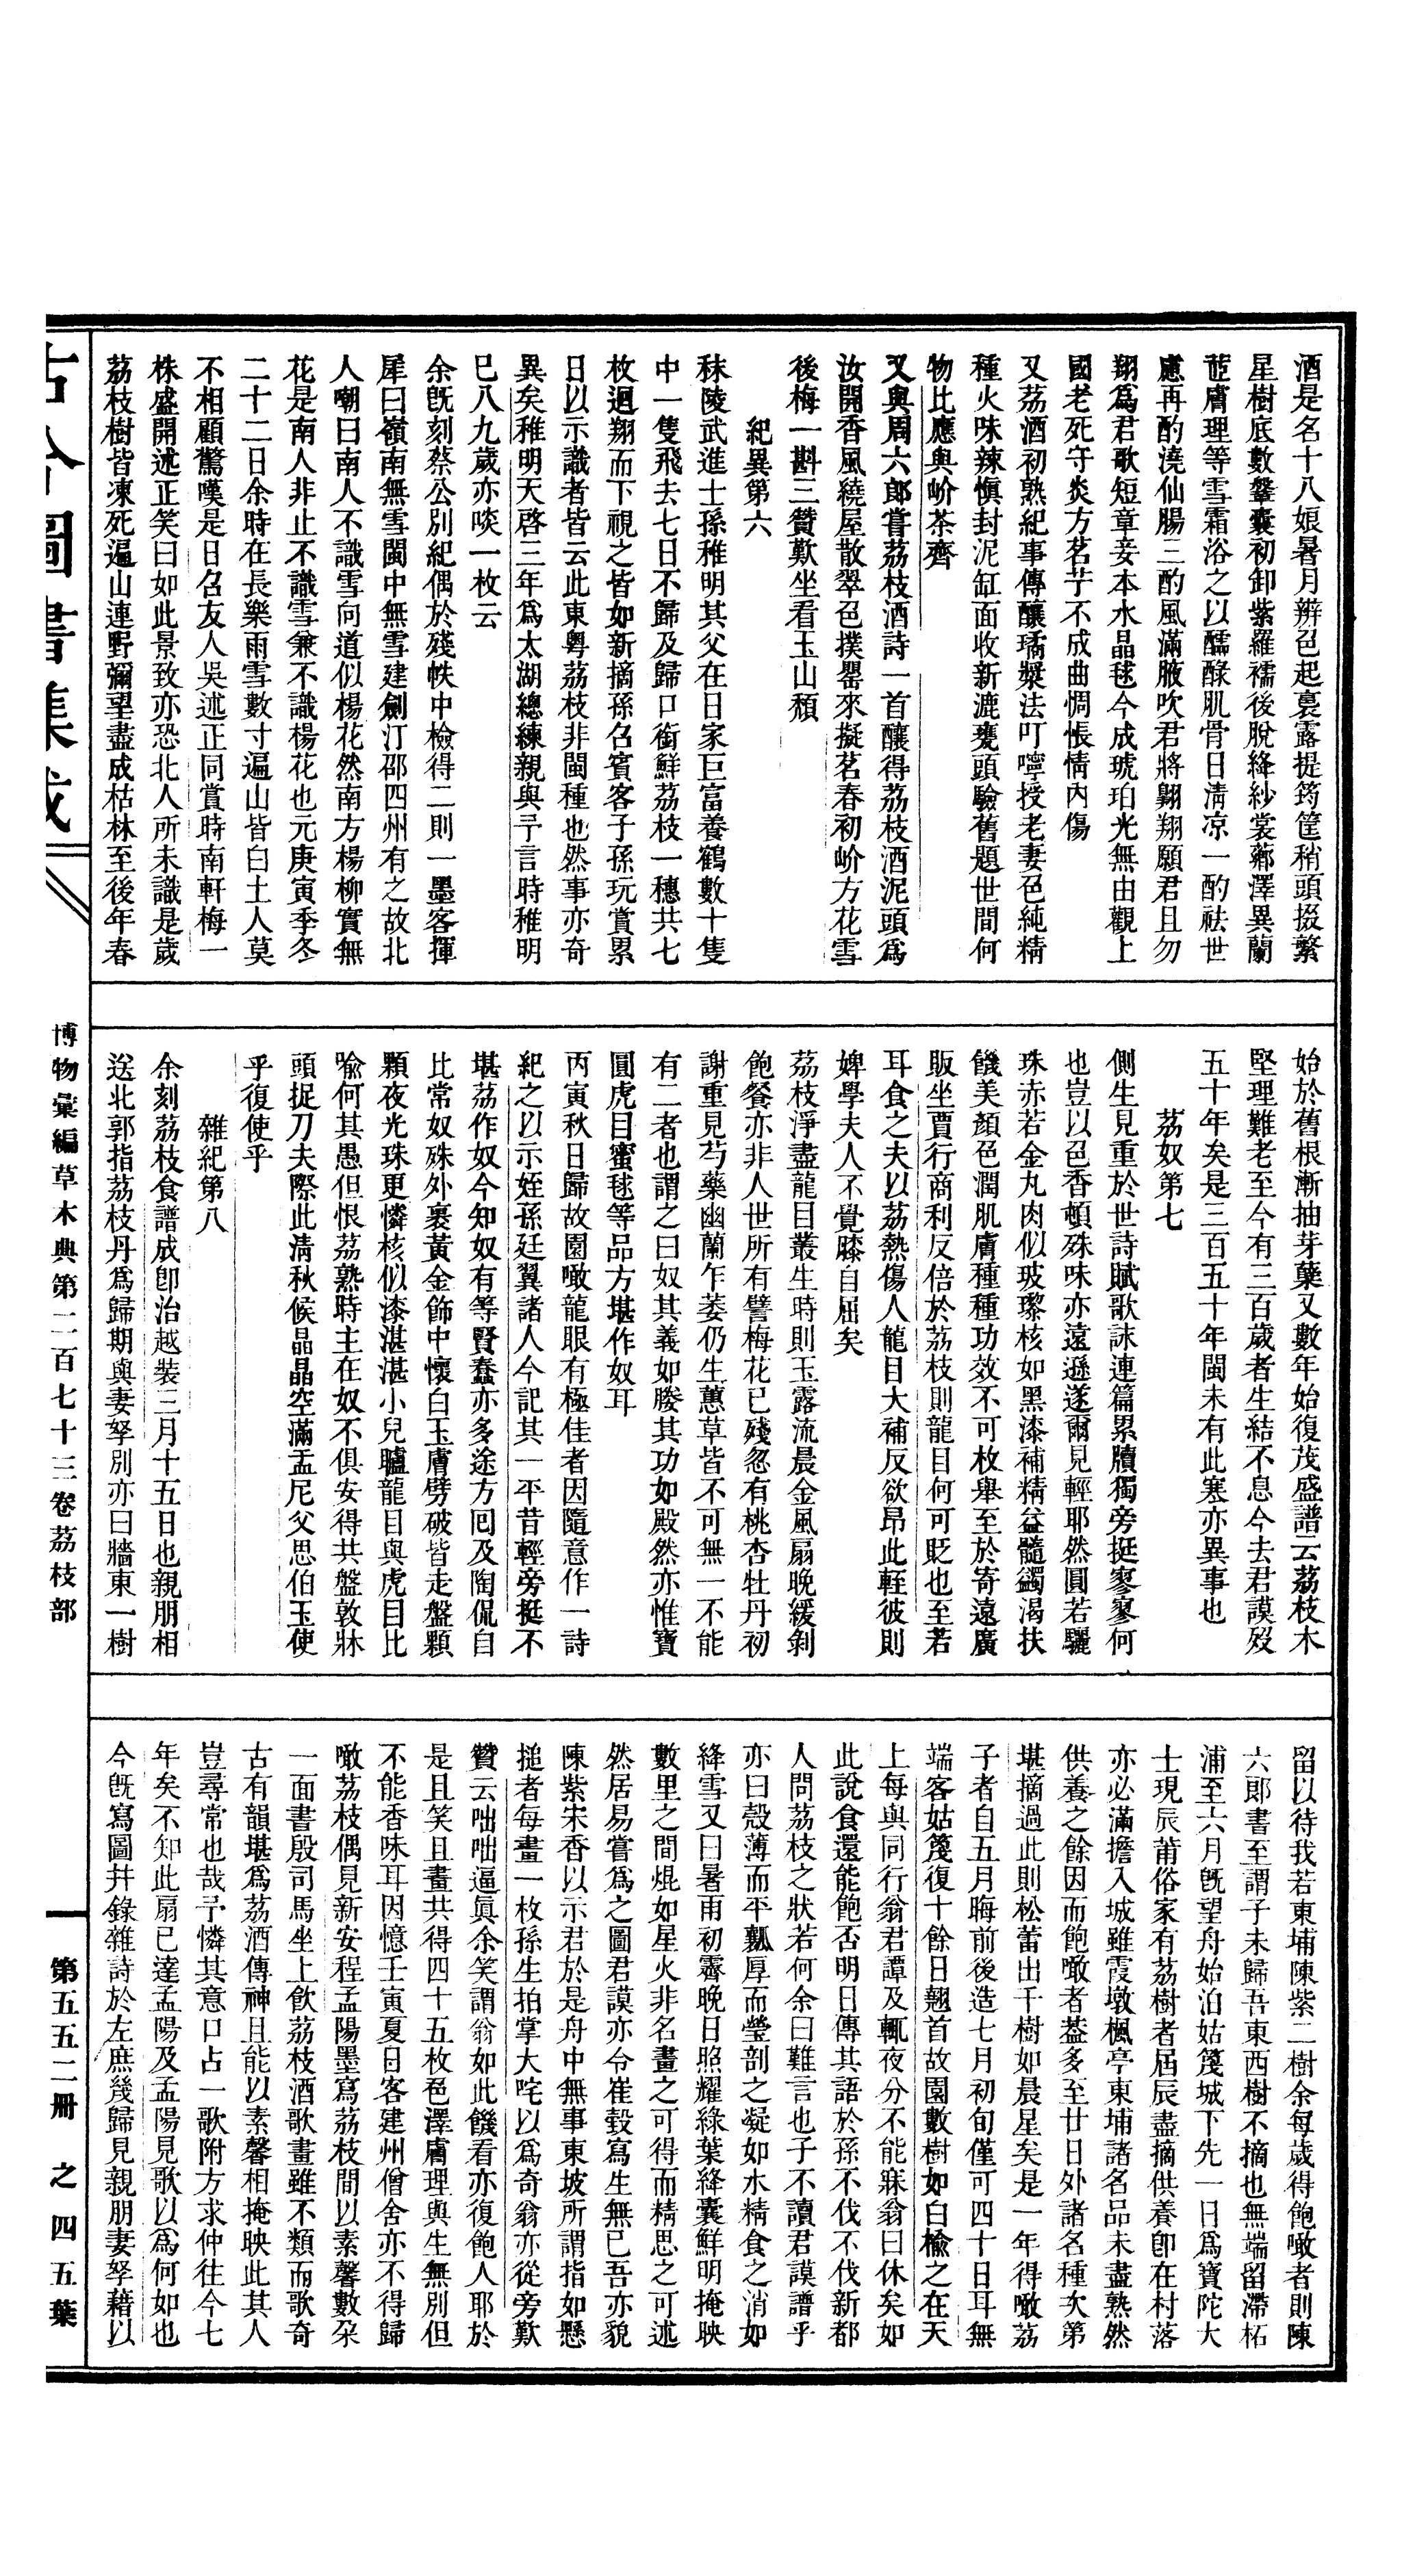 Page Gujin Tushu Jicheng Volume 552 1700 1725 Djvu 90 维基文库 自由的图书馆